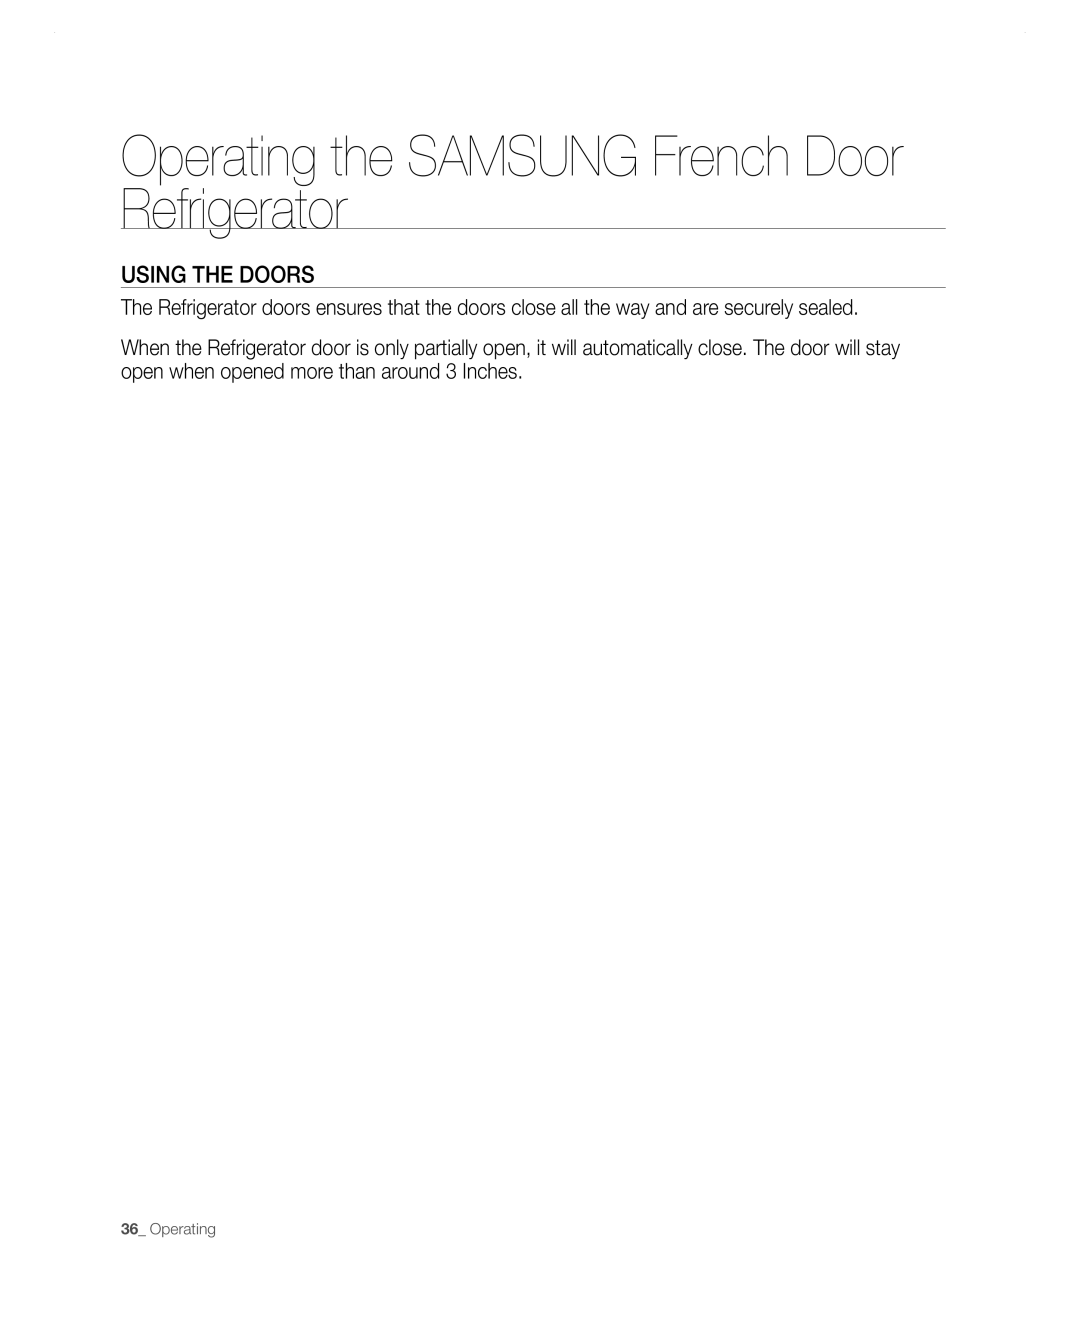 Samsung RF267AA user manual Using The Doors, Operating the SAMSUNG French Door Refrigerator 